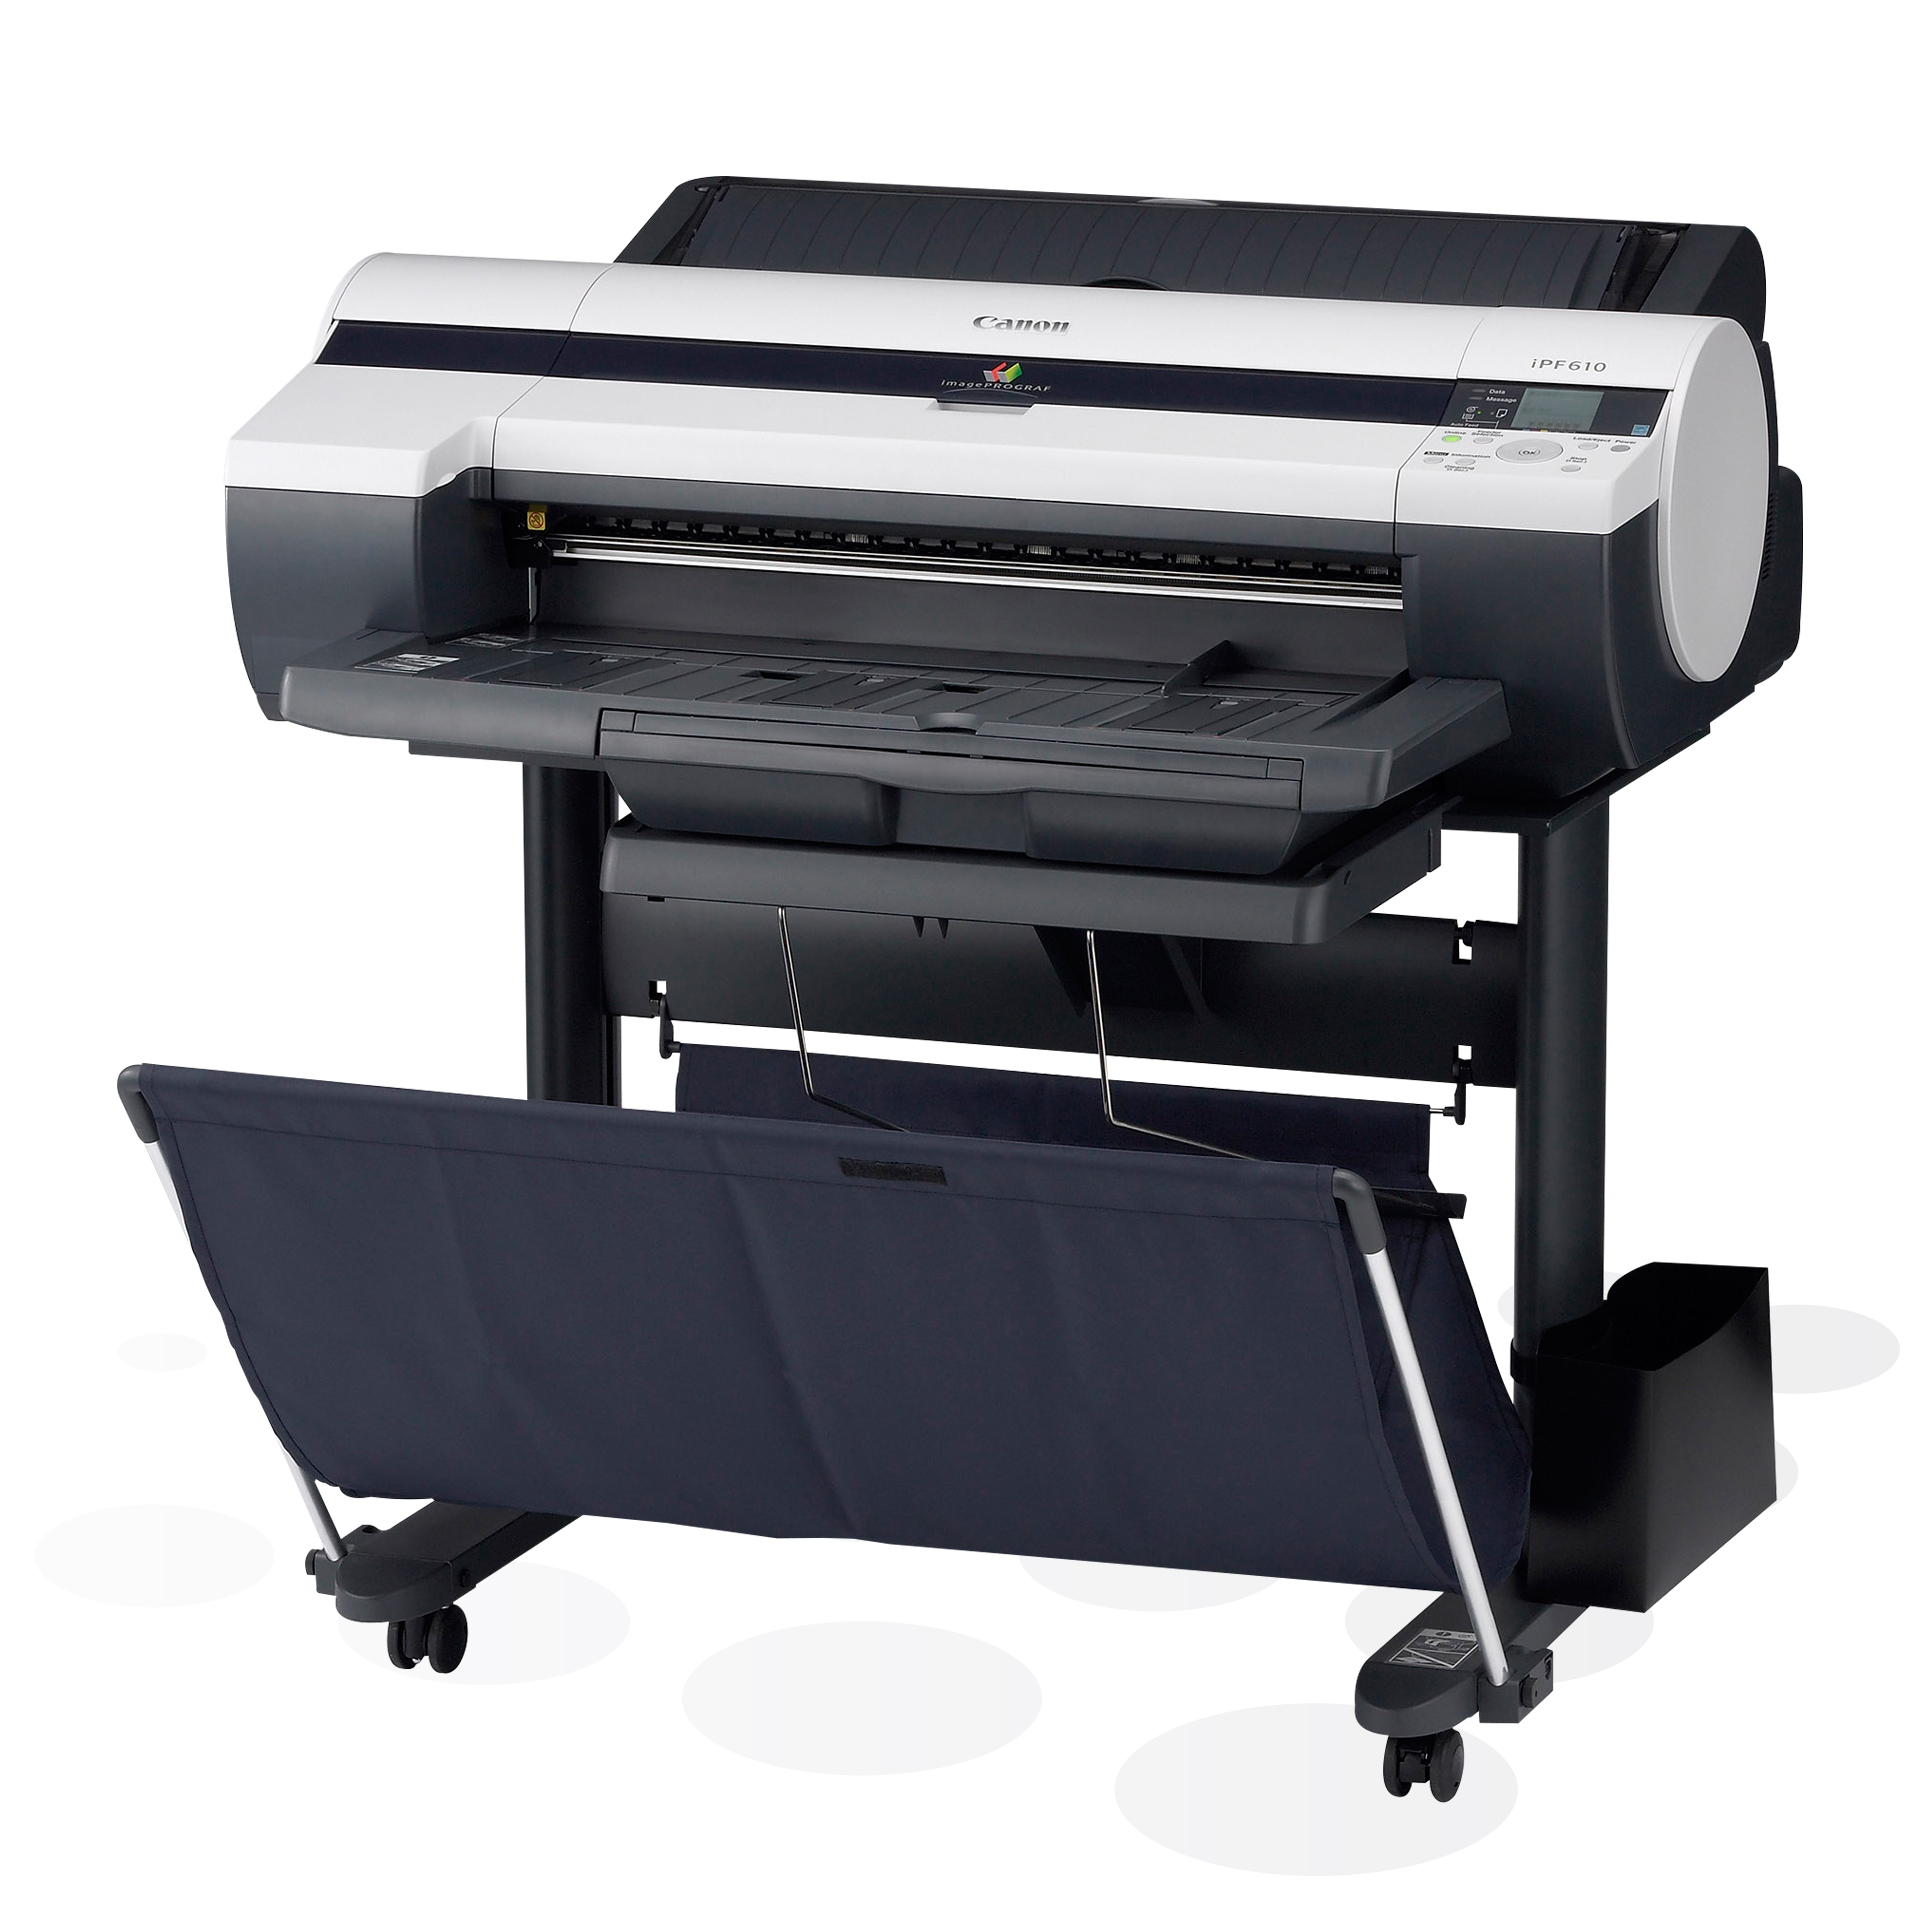 iPF610 - 24" Großformatdrucker